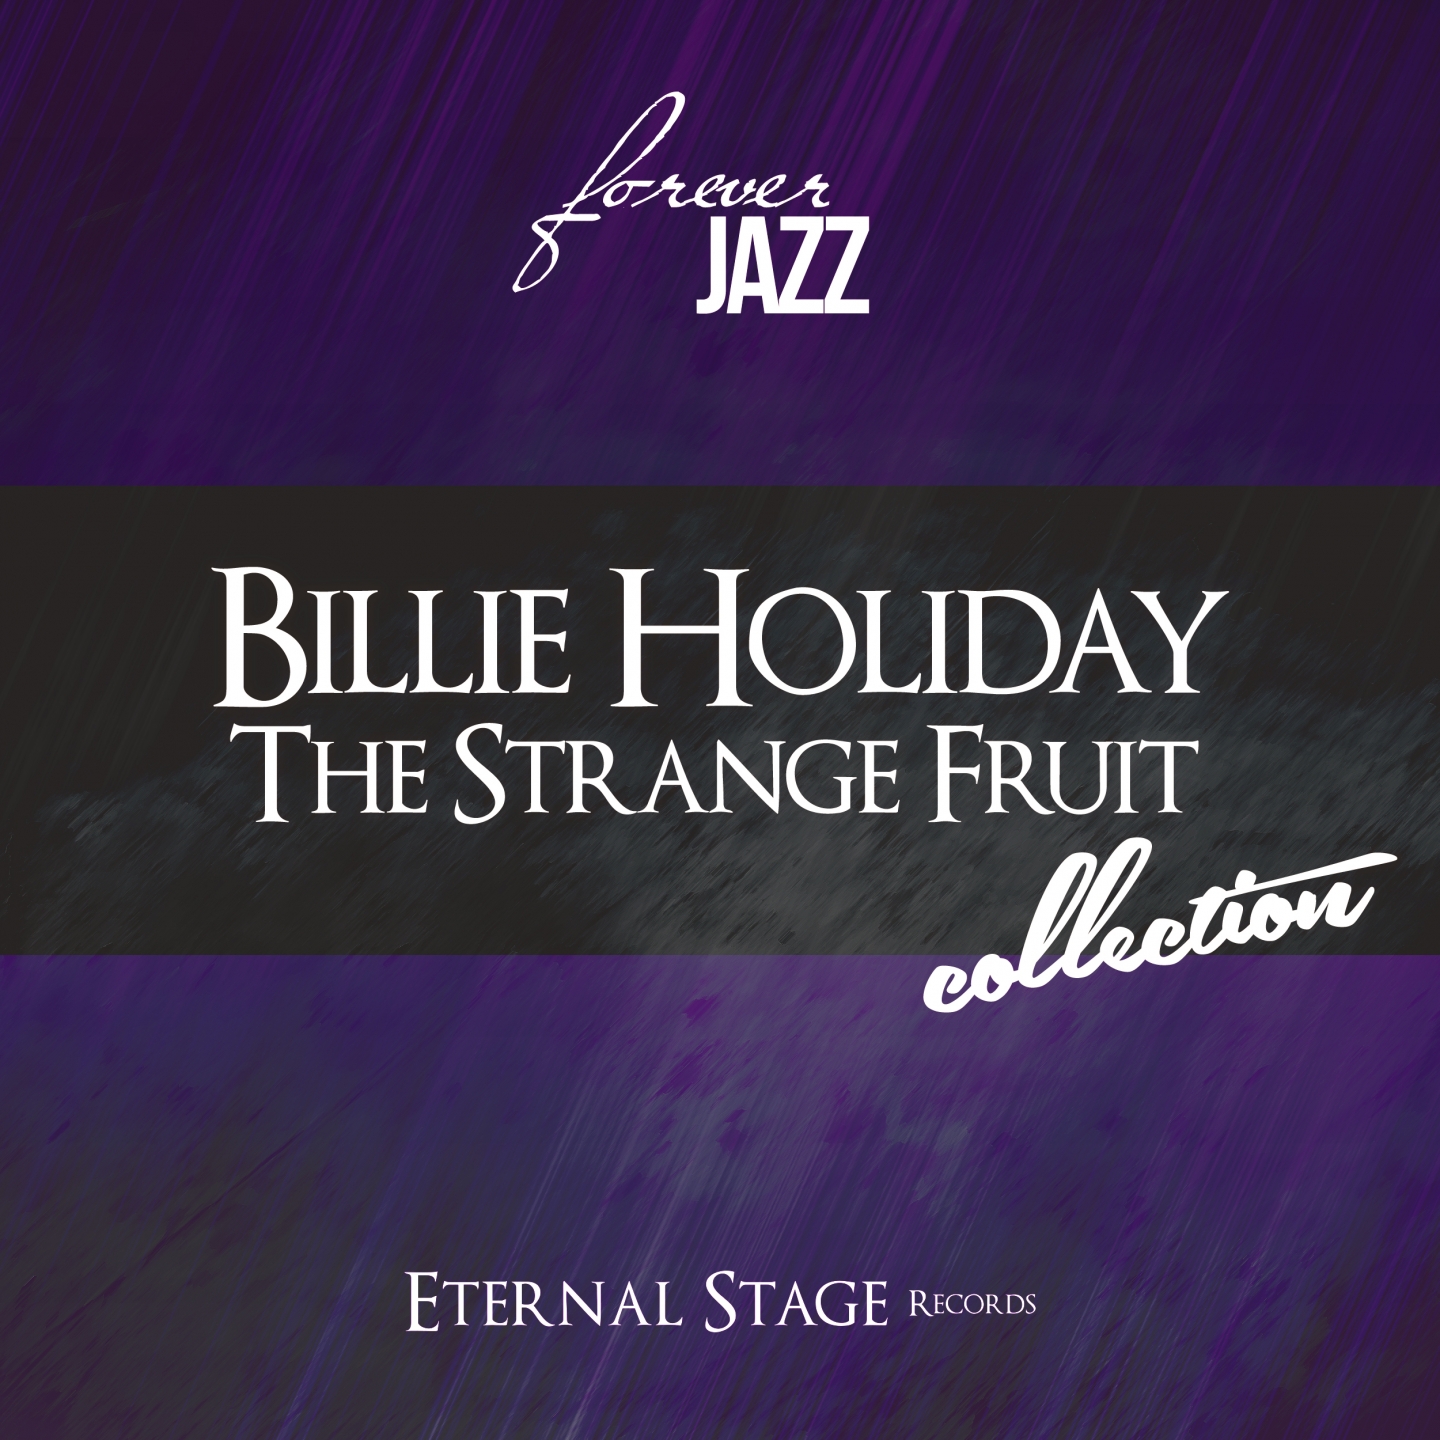 The Strange Fruit Collection (Forever Jazz)